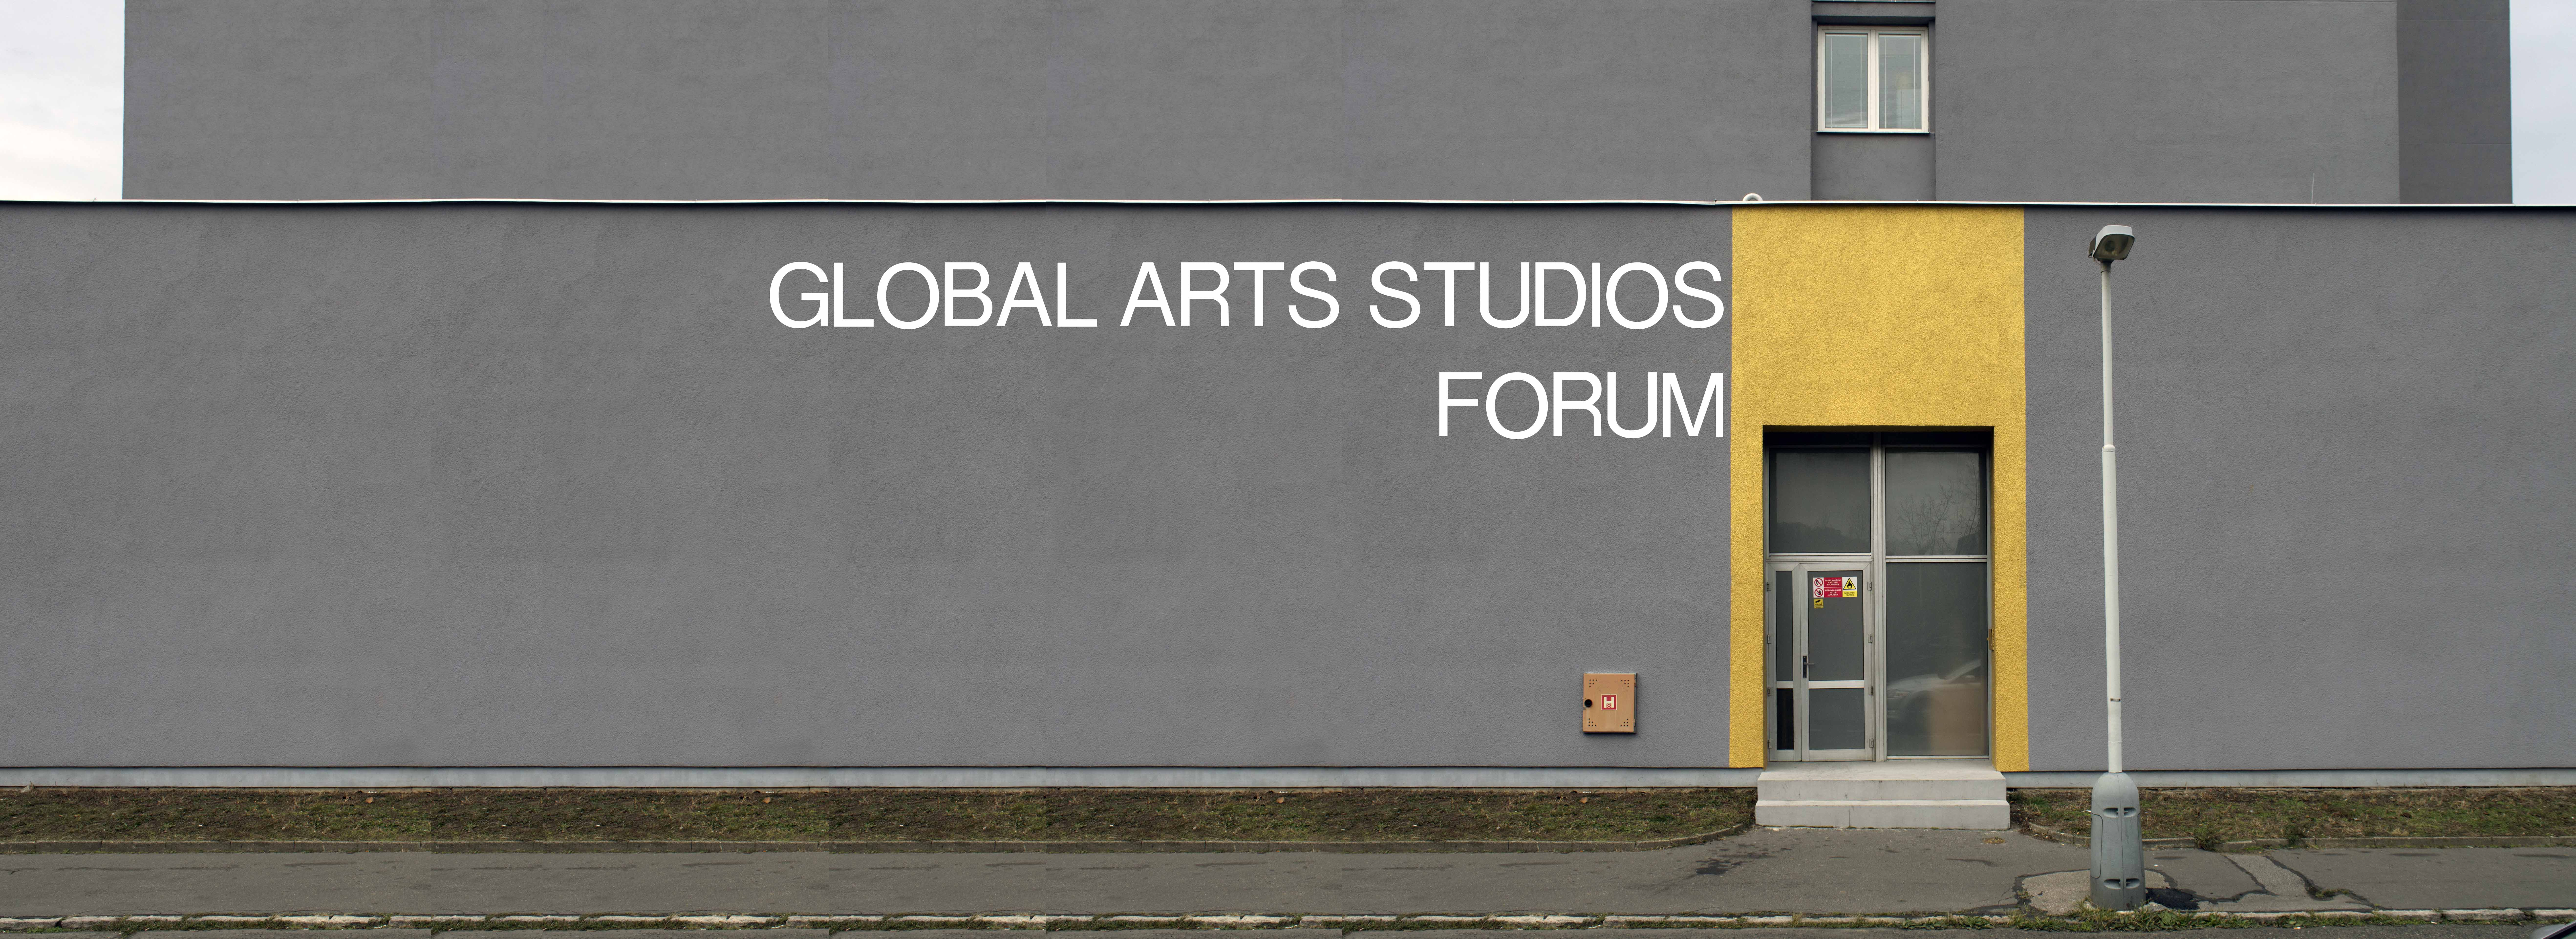 Global Arts Studios